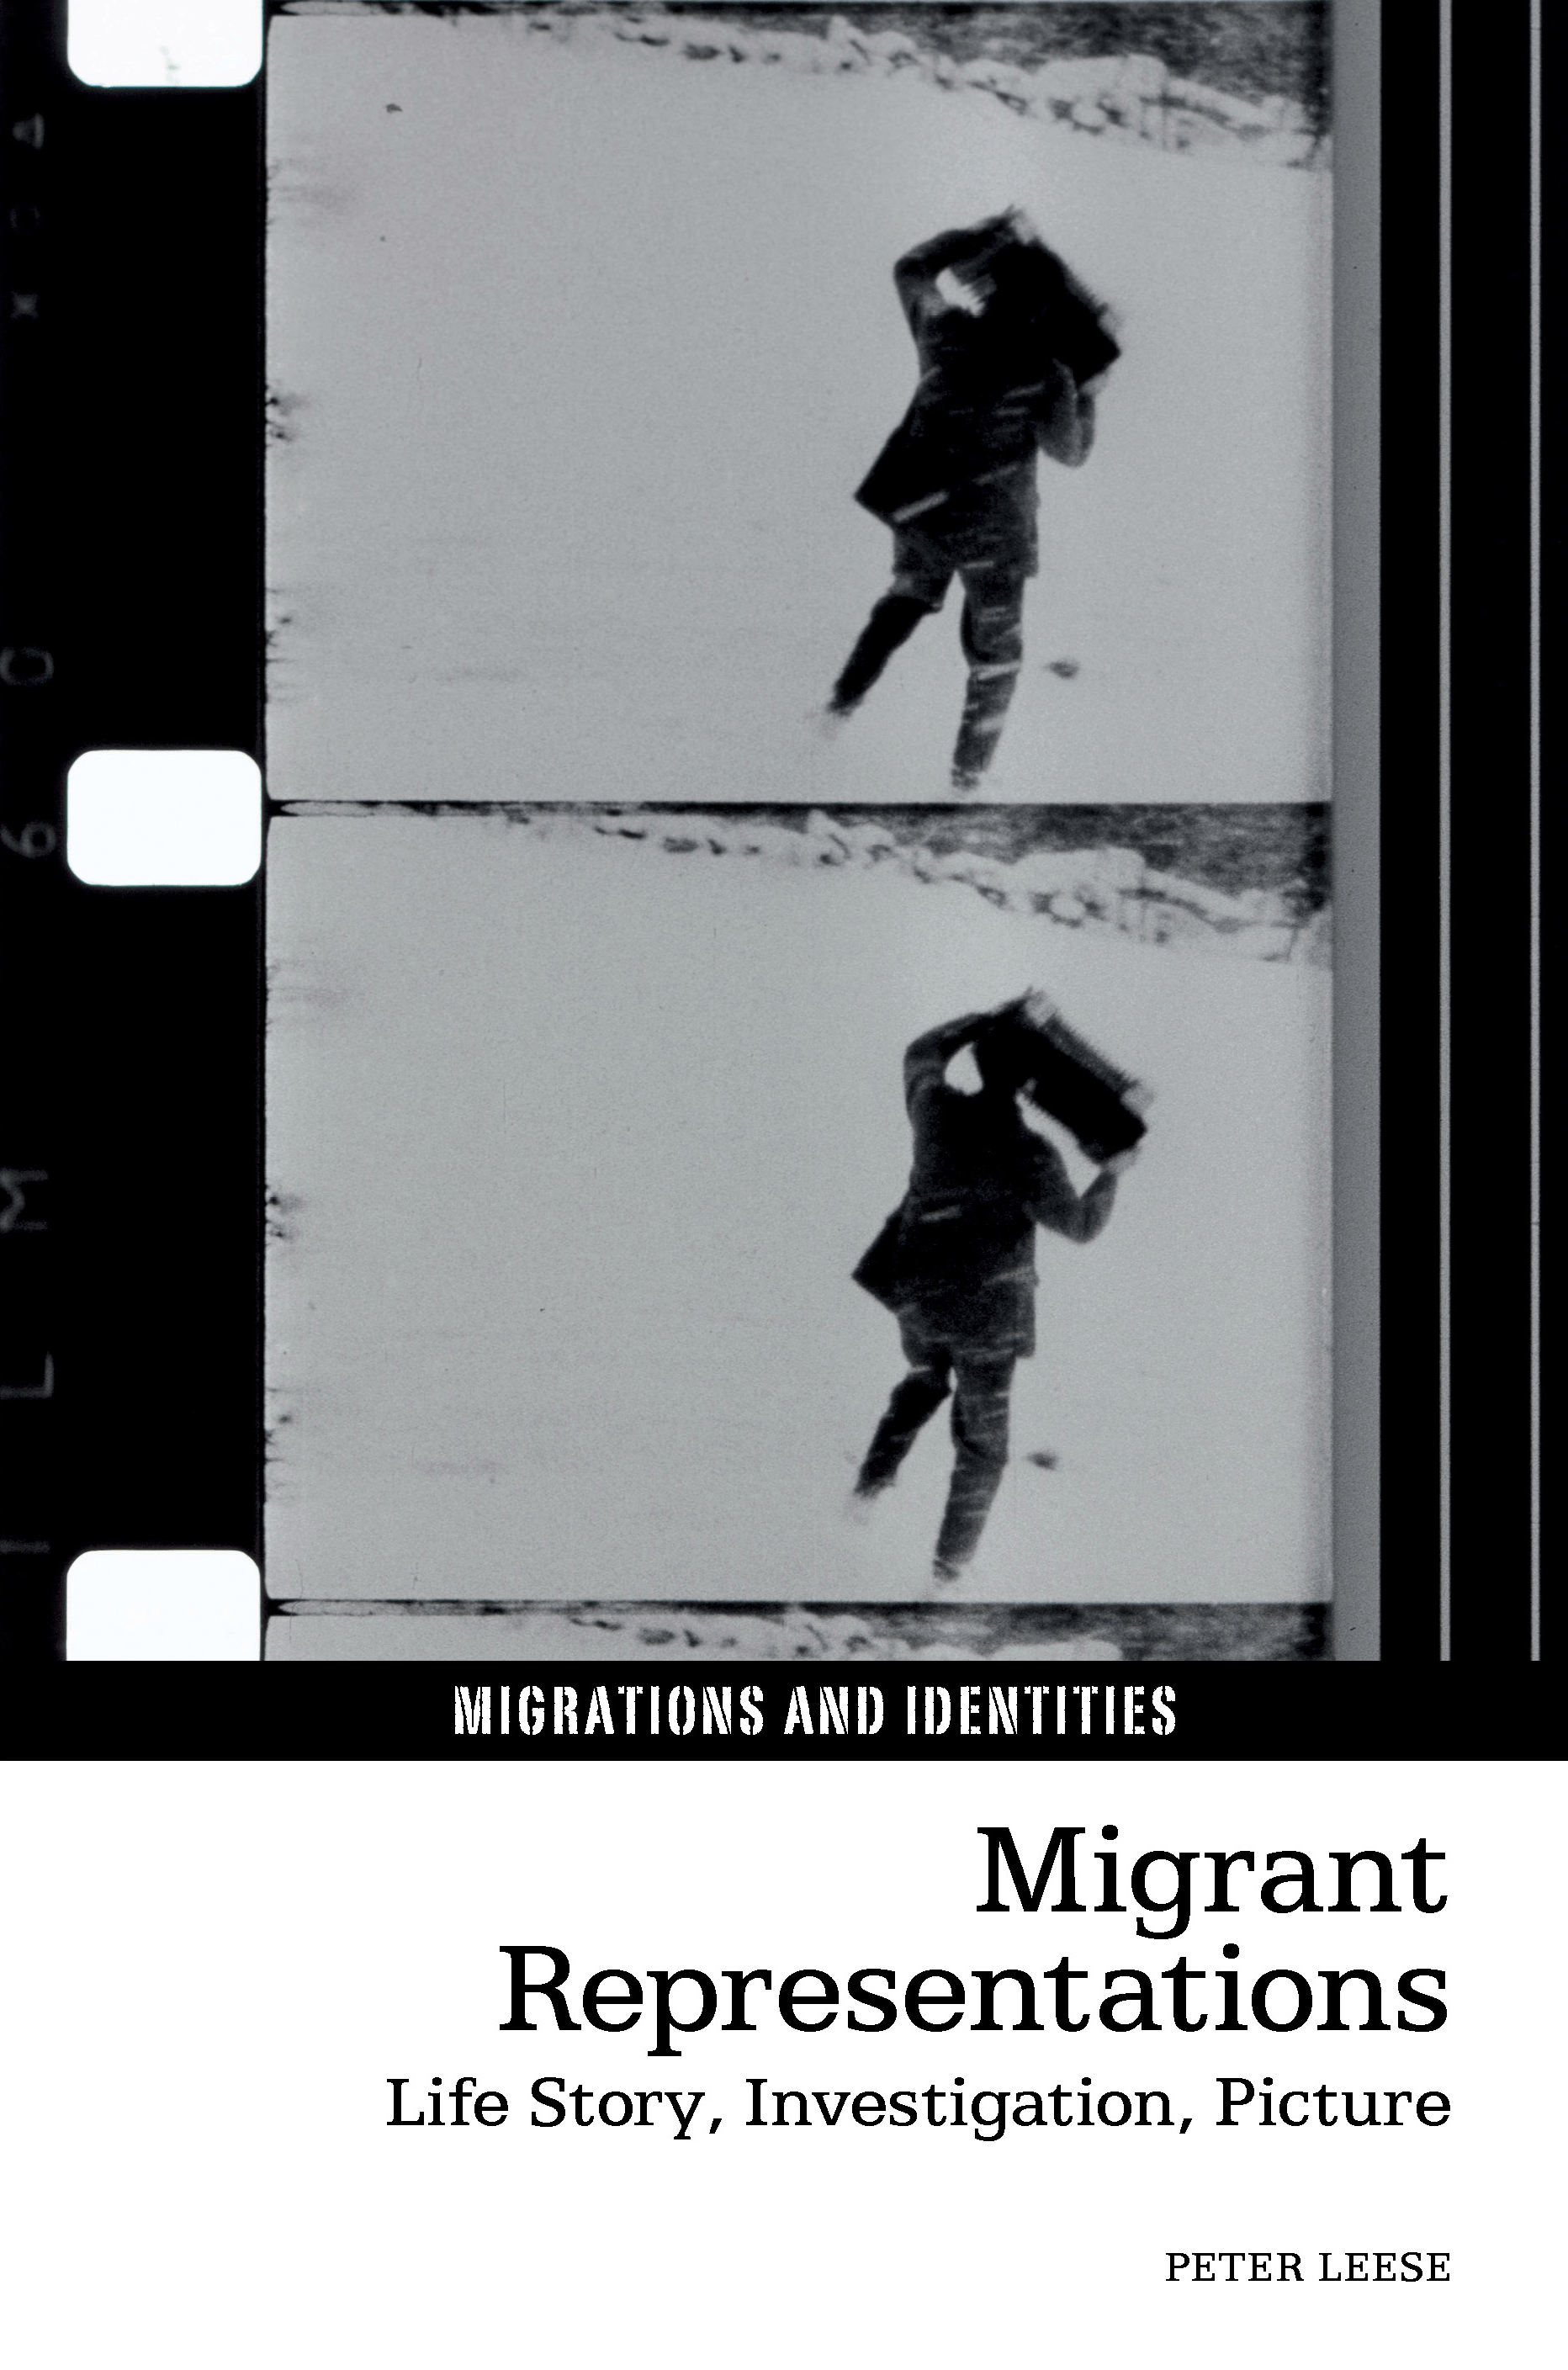 Book cover of Peter Leese's Migrant Representations